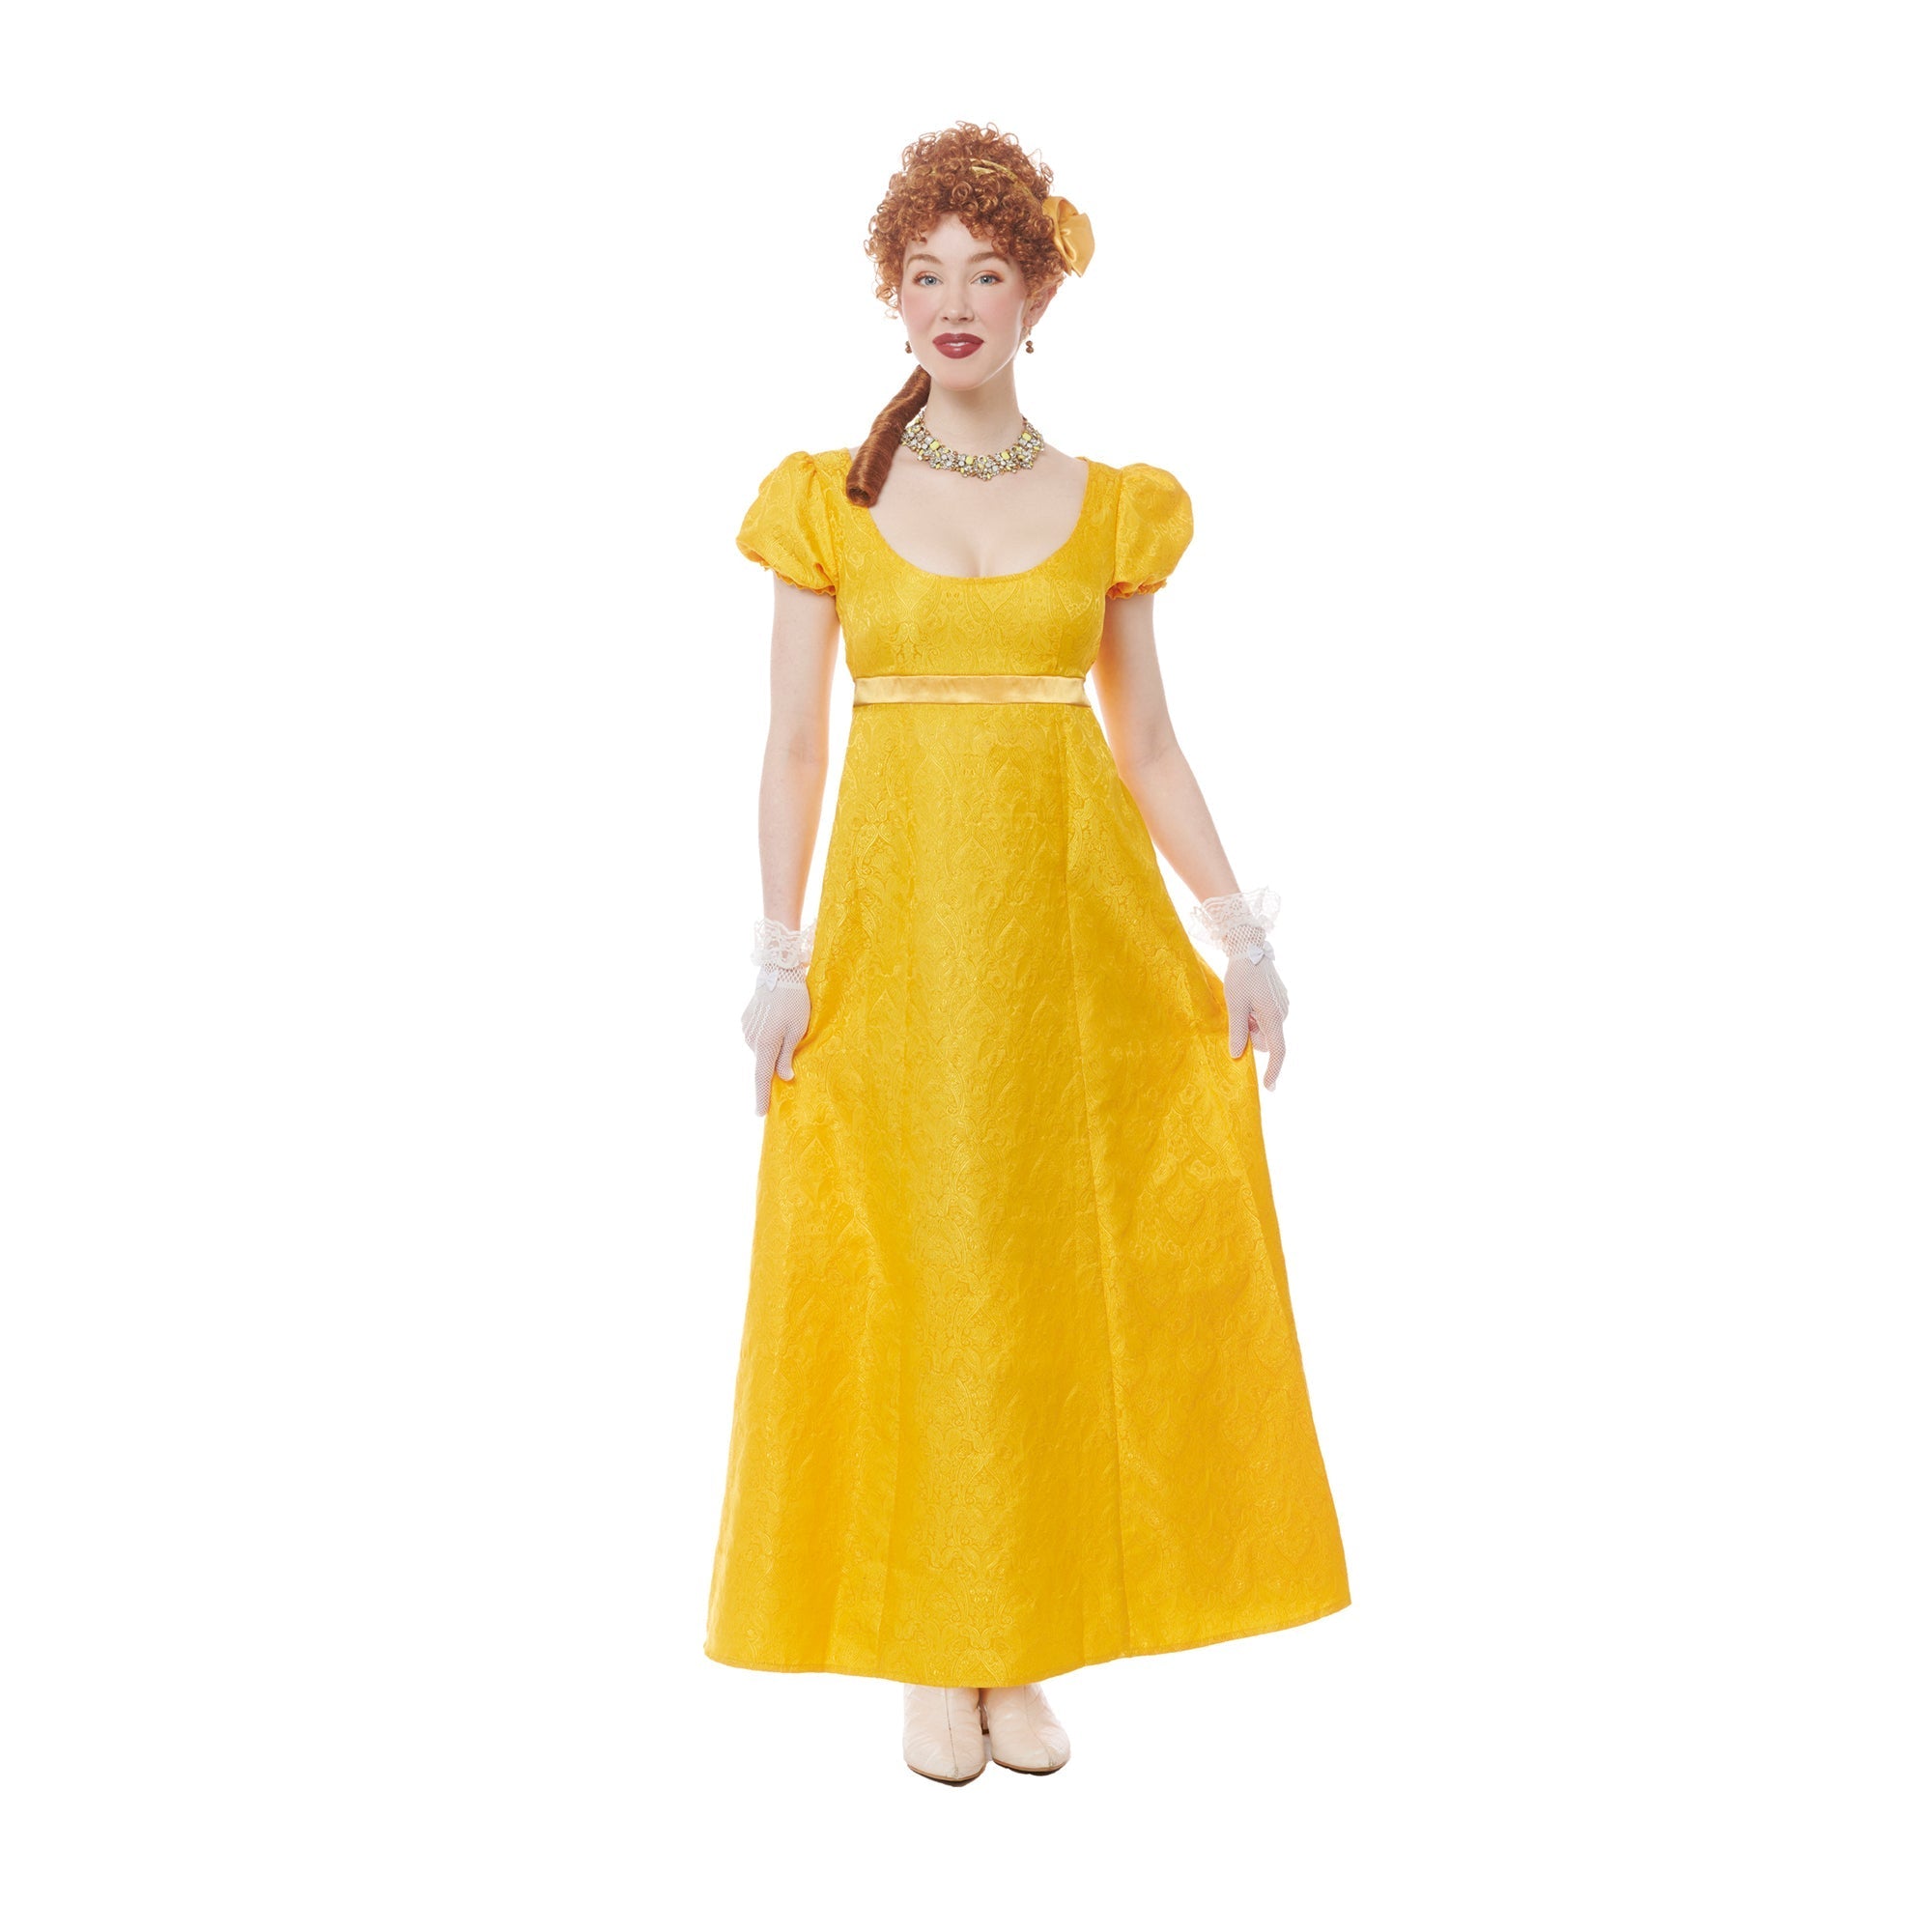 Regency Debutante Costume for Adults, Yellow Dress, Bridgerton